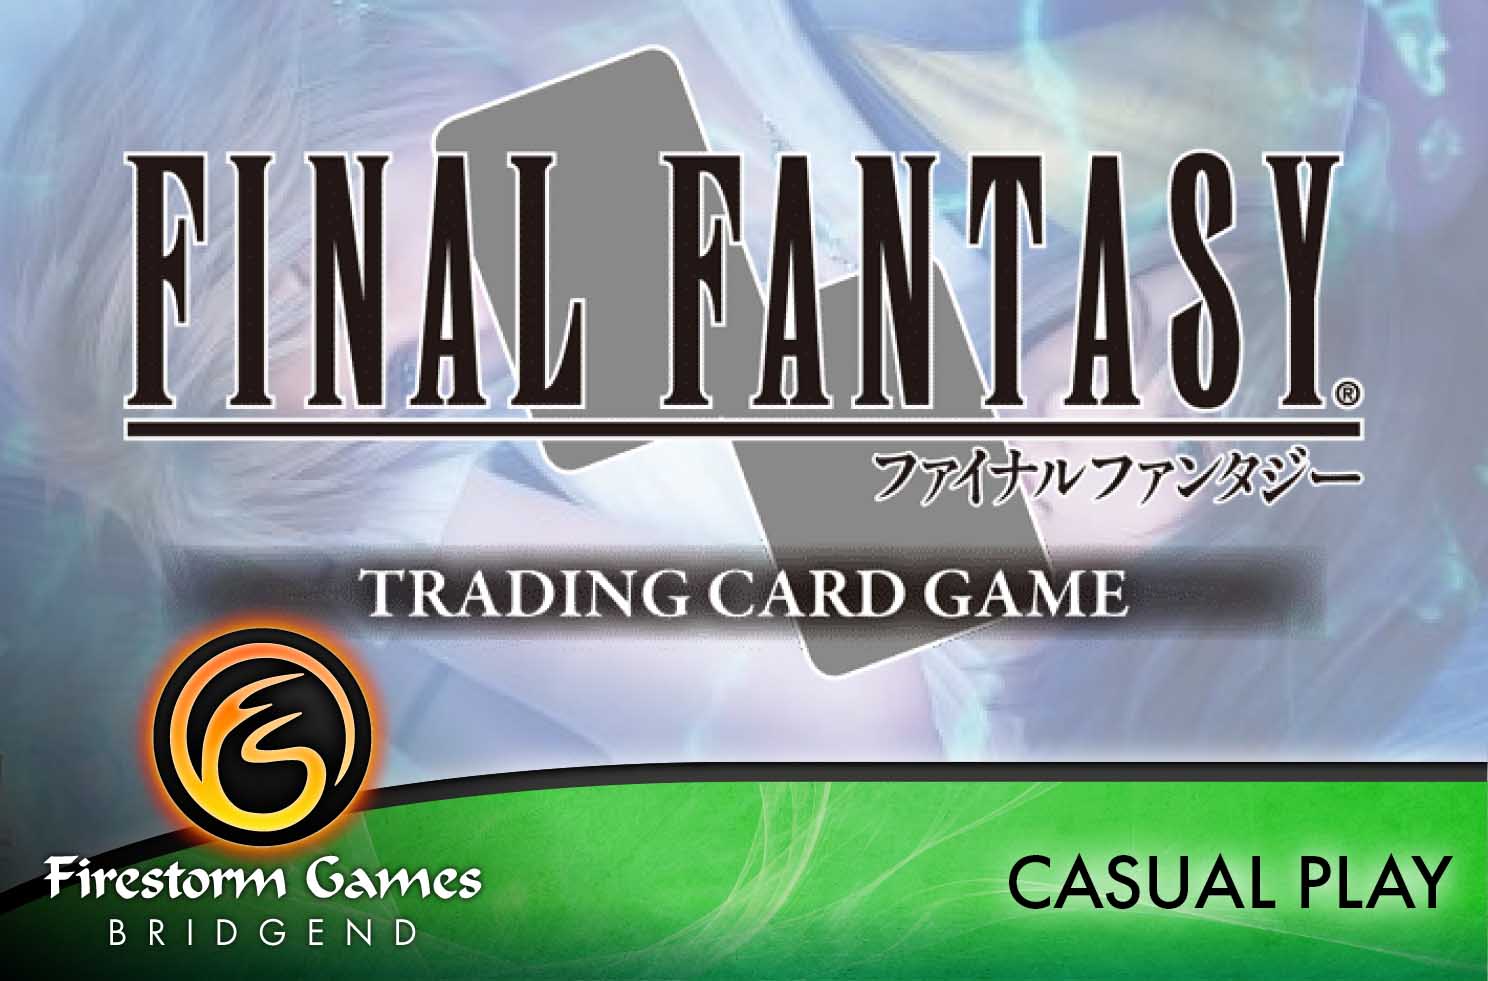 Final Fantasy TCG Tuesday Casual Play Bridgend